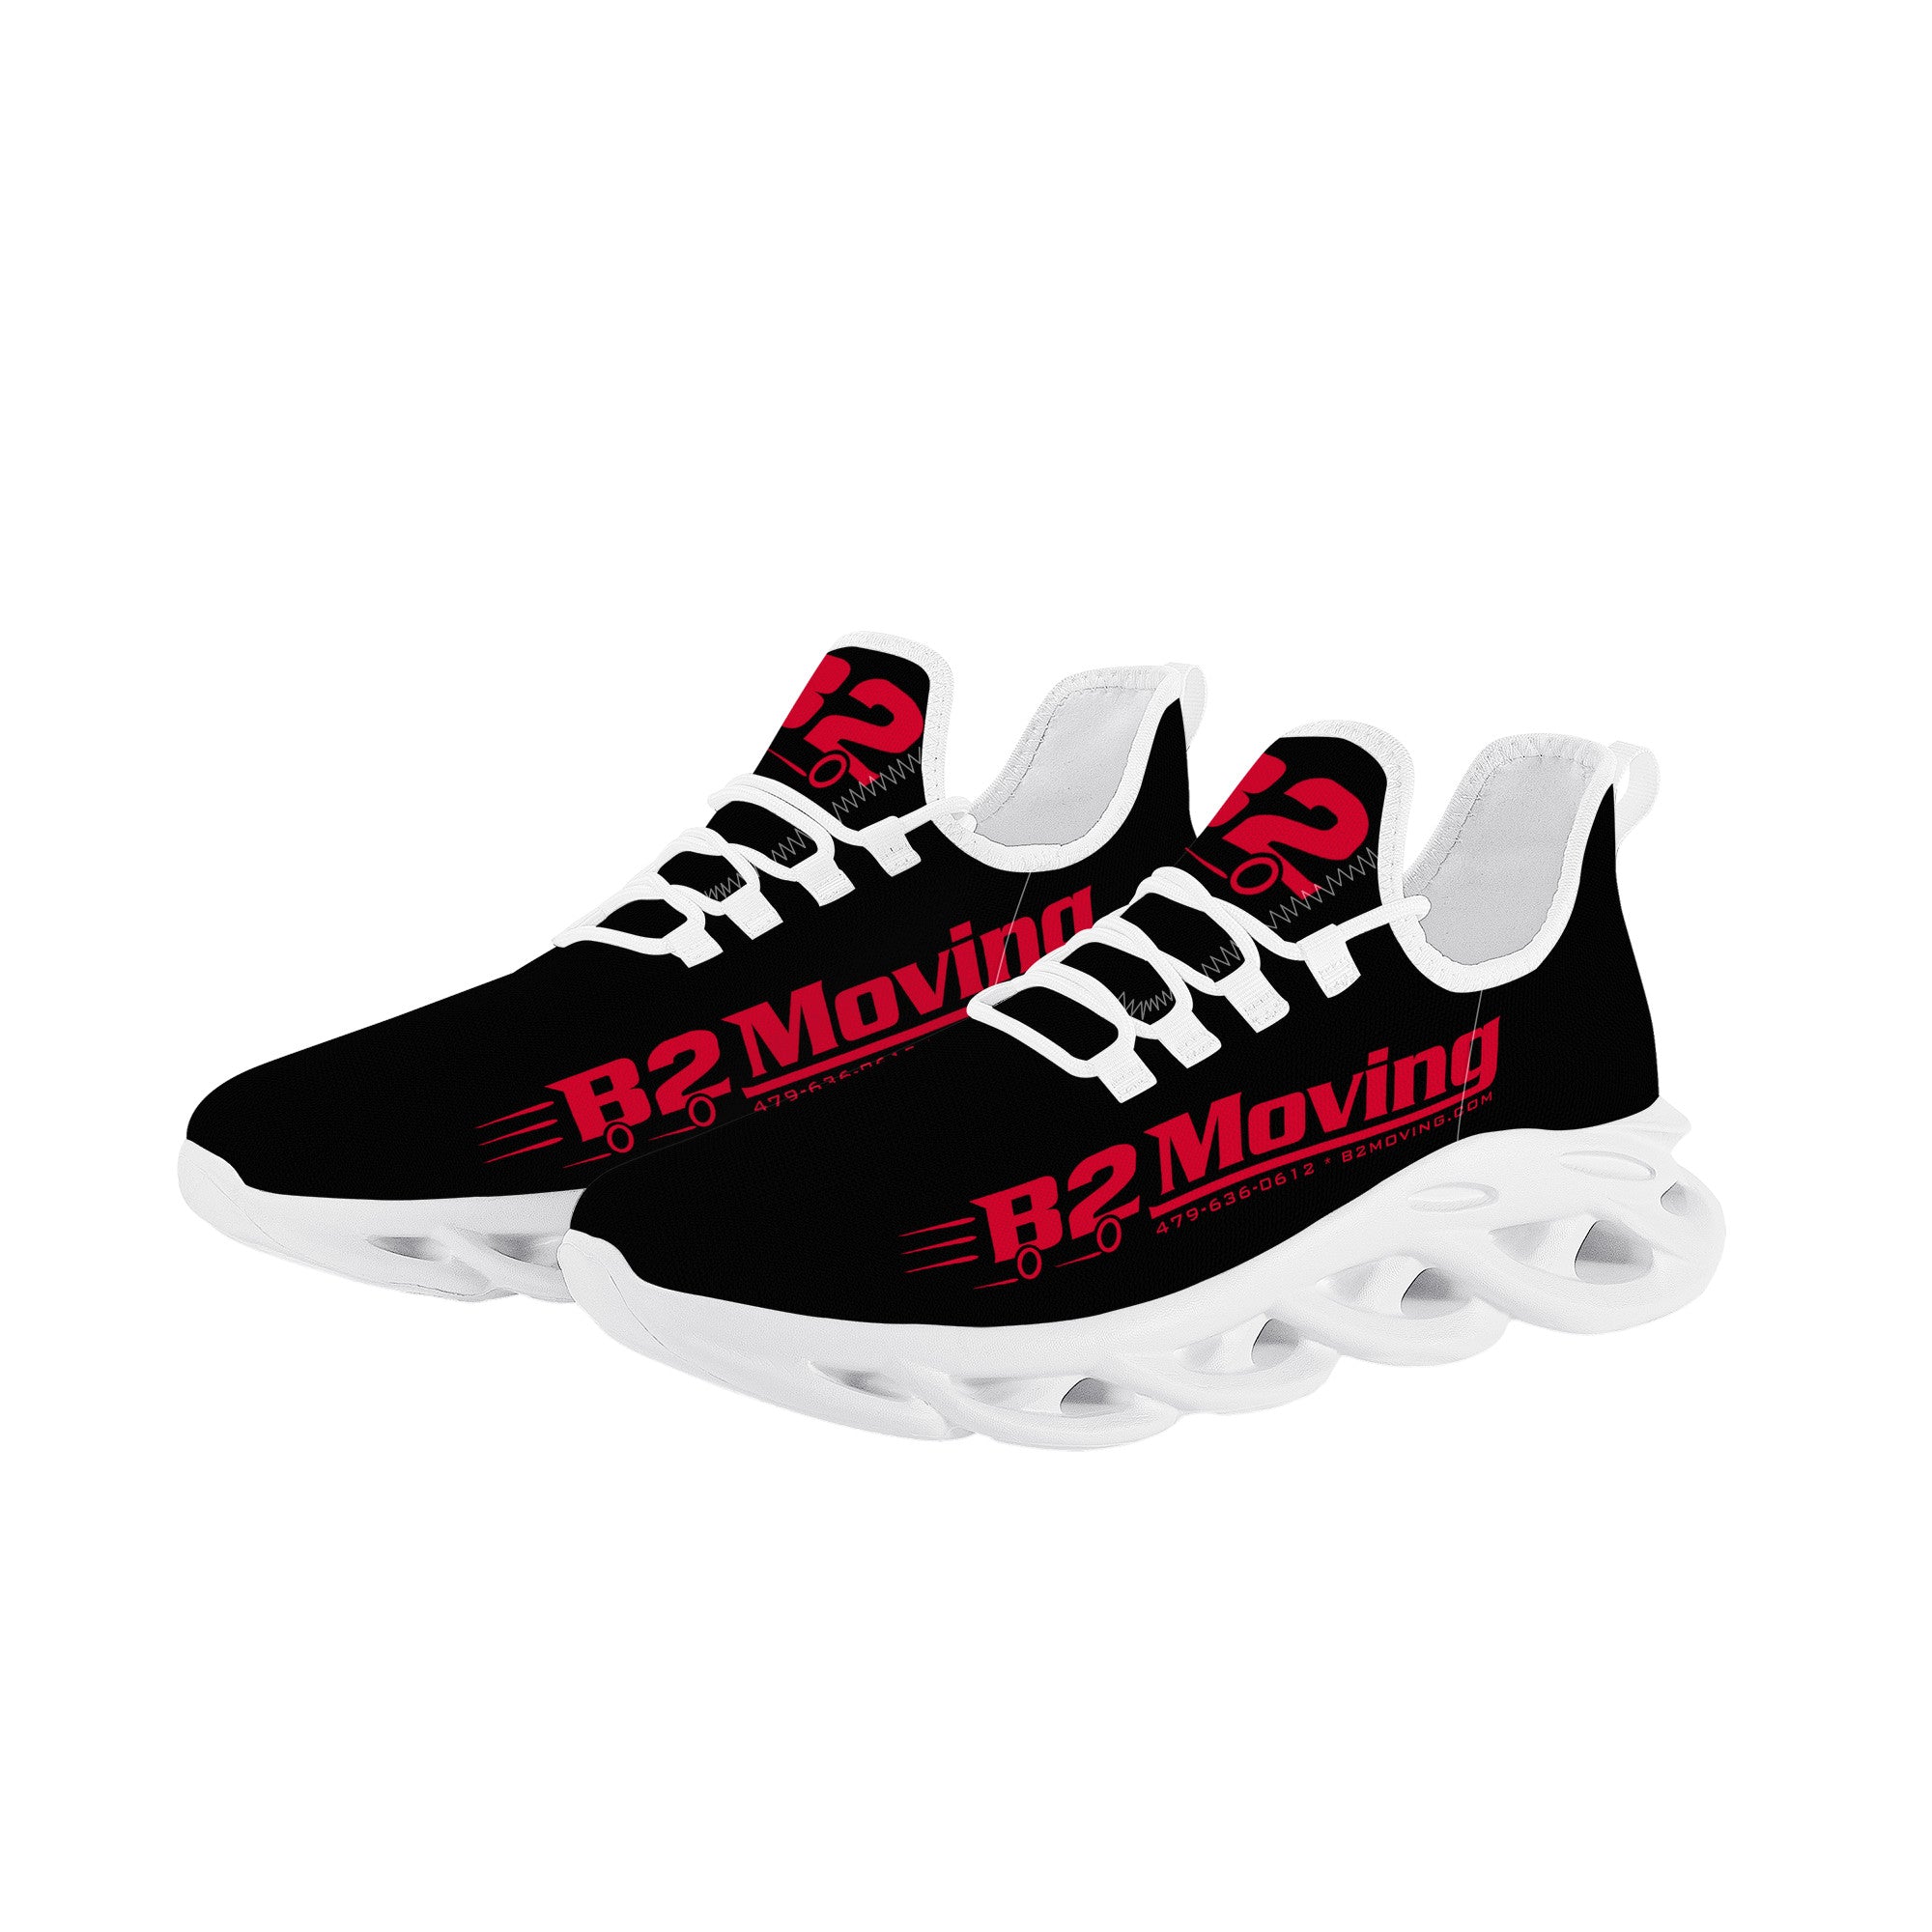 B2 Moving Customized Flex Control Sneaker - White - Shoe Zero